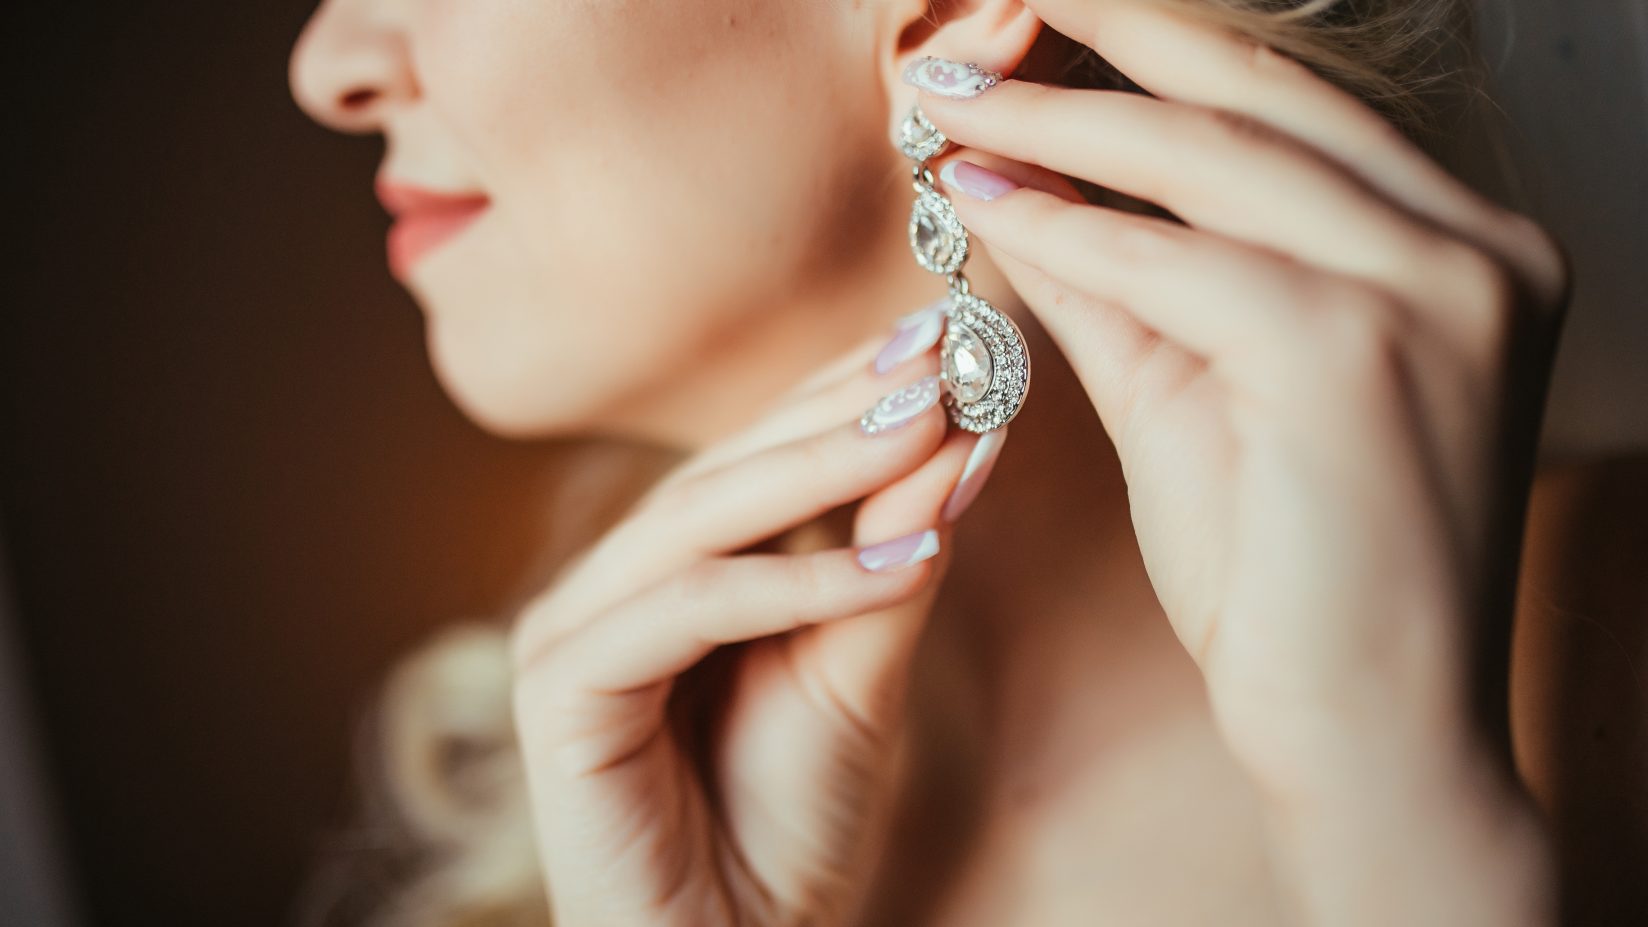 wedding-preparation-beautiful-happy-bride-dresses-earrings-before-wedding-wedding-accessories-jewelry-closeup-portrait-of-bride-selective-focus